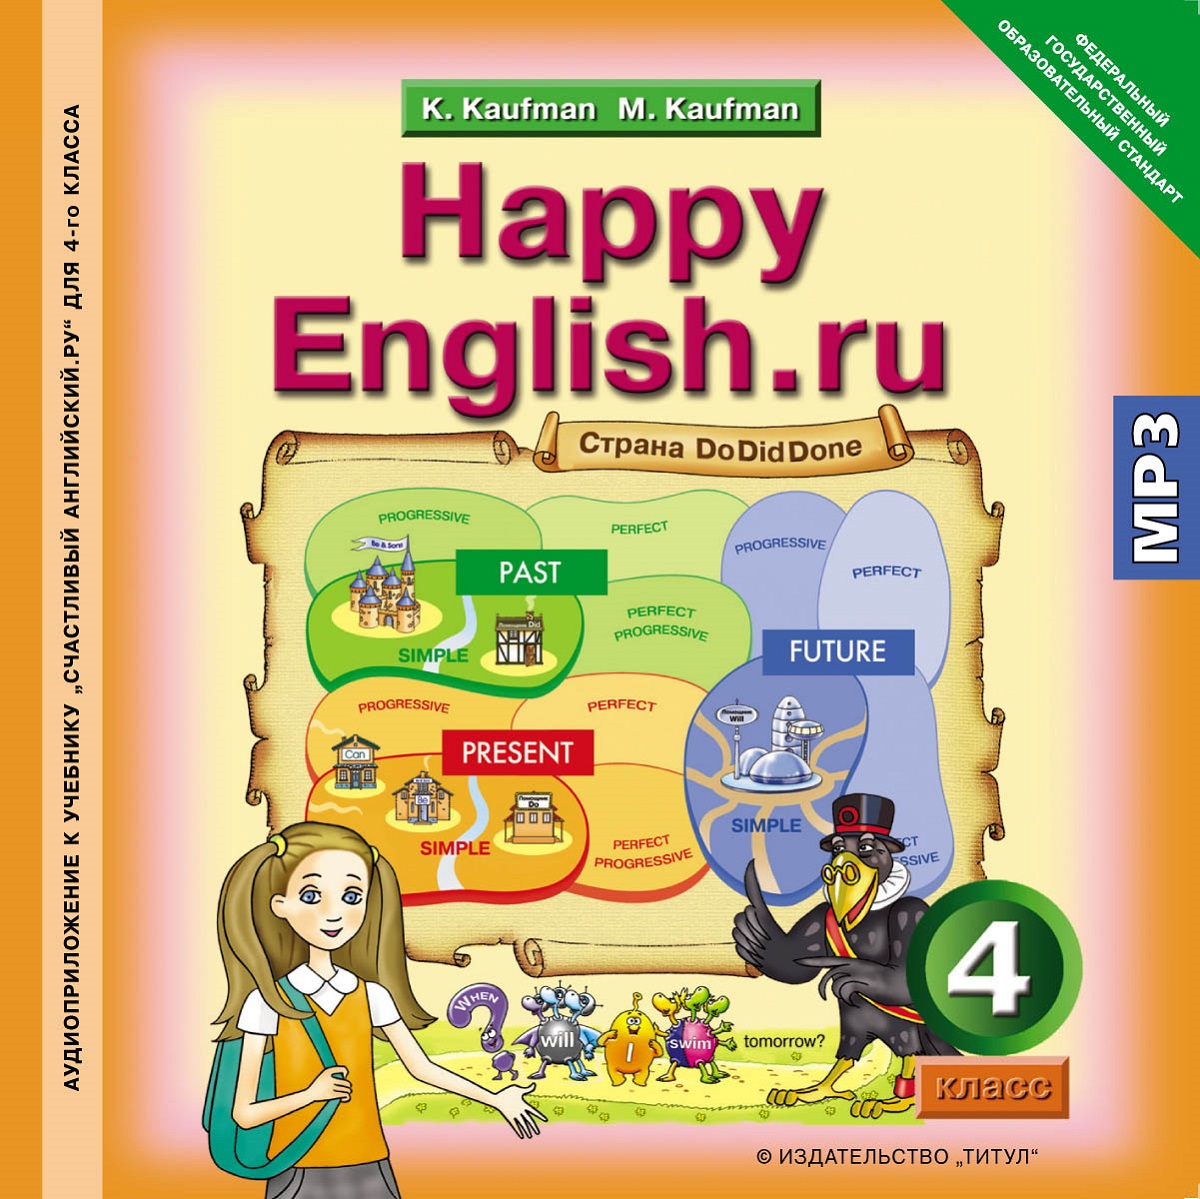 Happy English. ru 4 (аудиокурс MP3 )